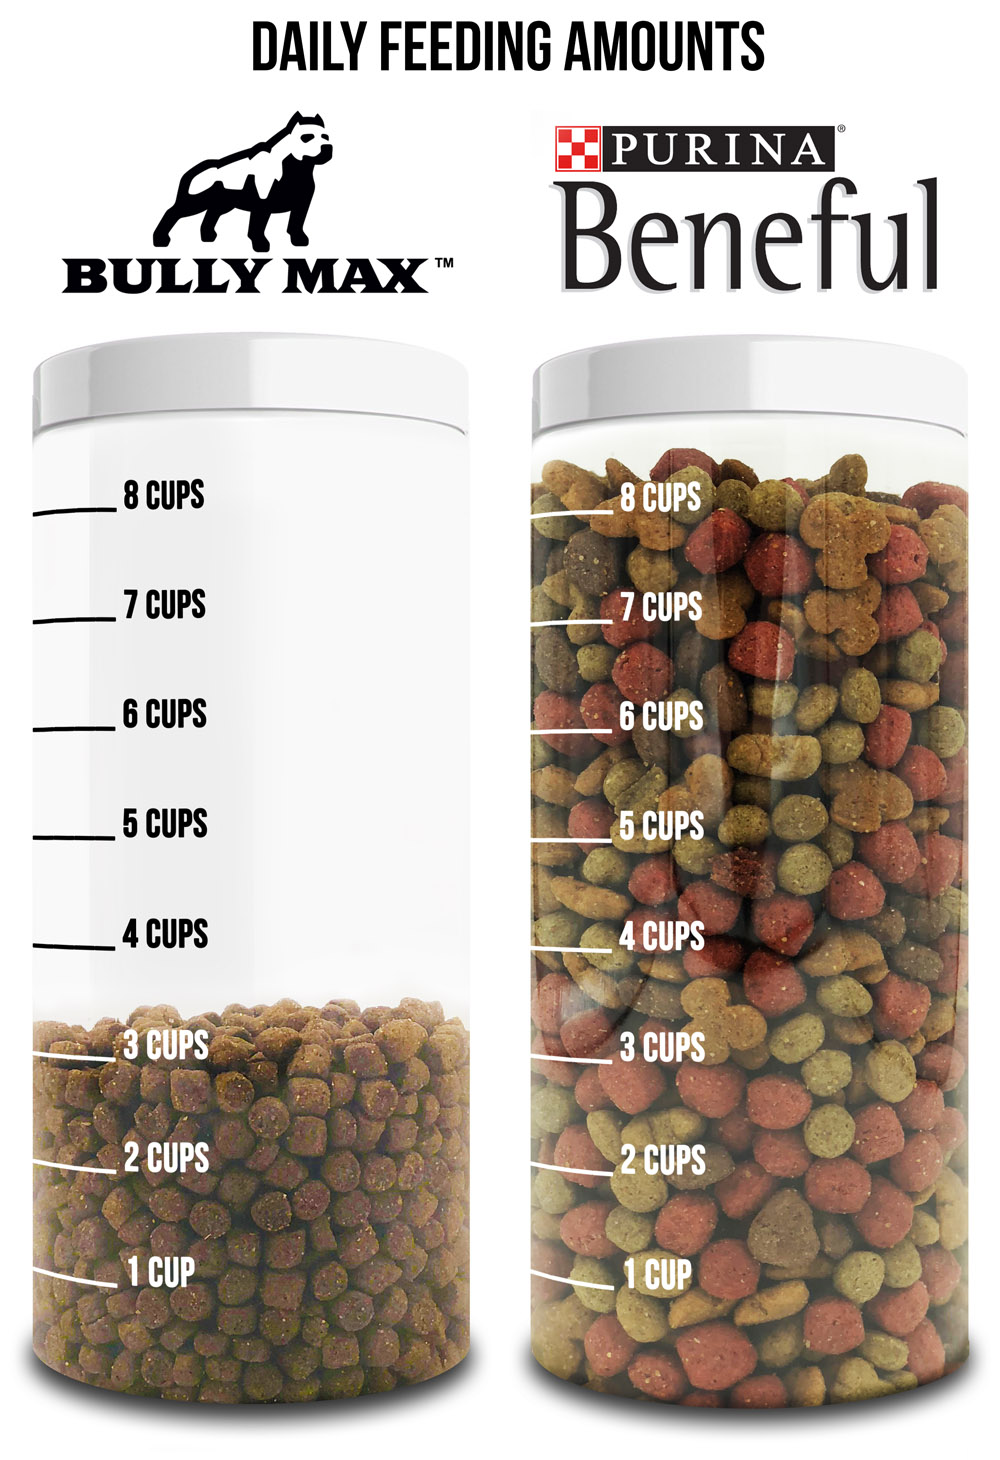 bullymax-vs-purina-beneful-dog-food.jpg